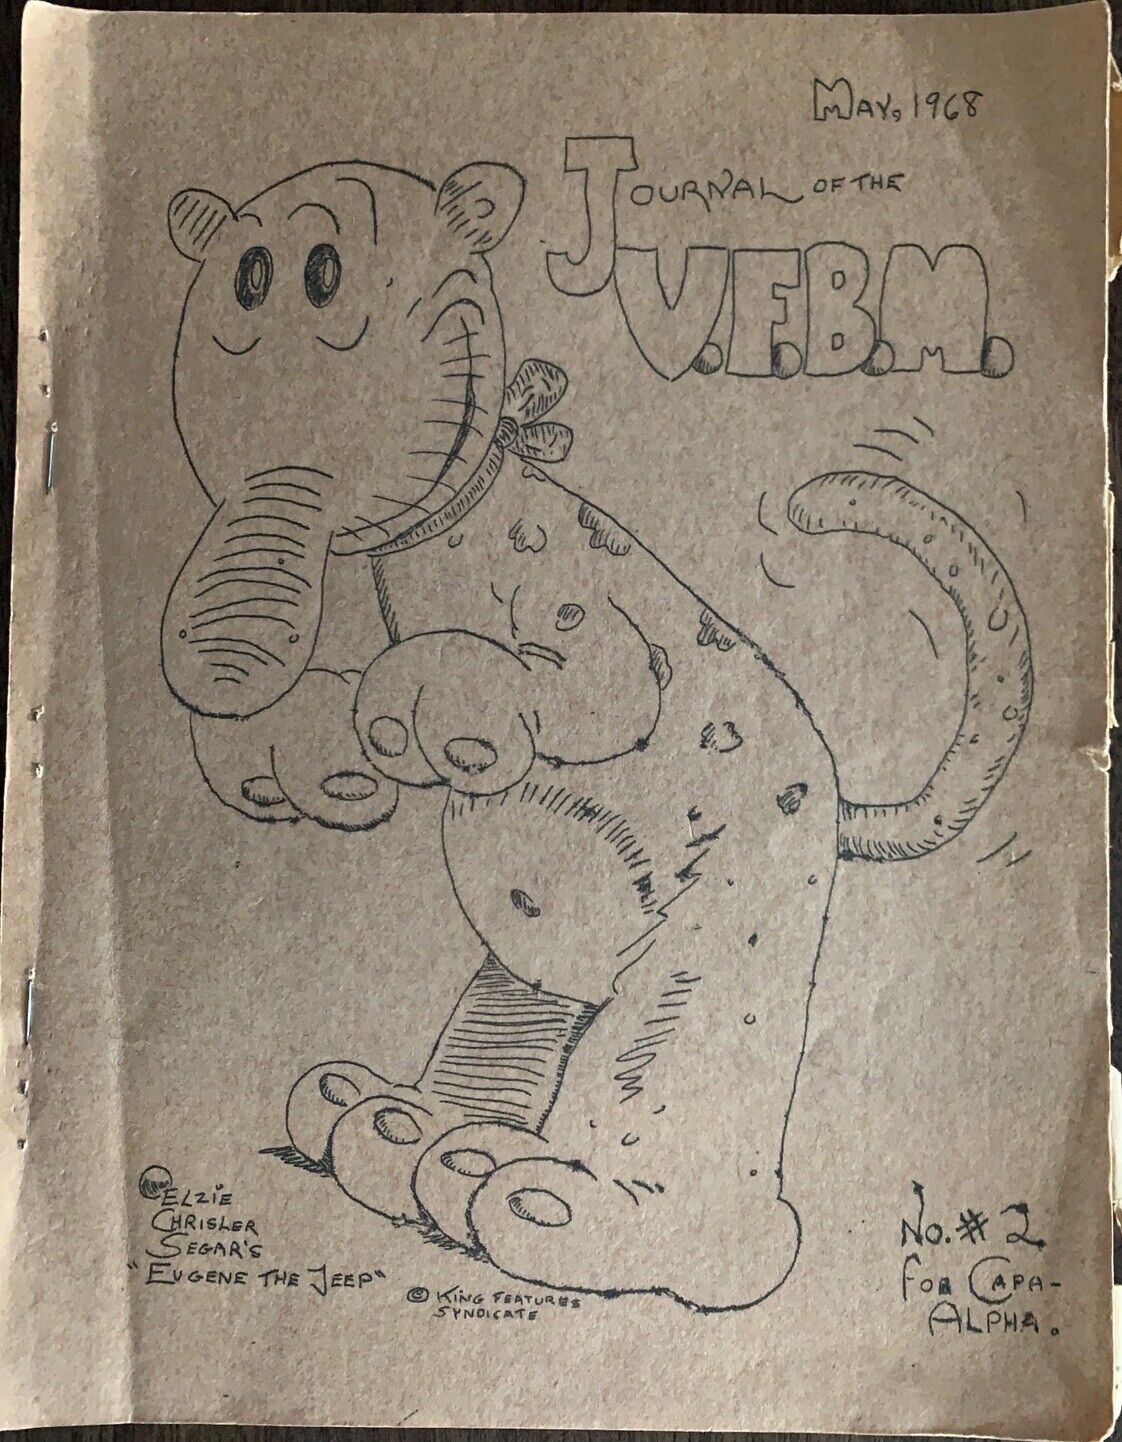 Rare 1968 Comics Fanzine Journal Of The VFBM #2 CAPA Alpha Zine